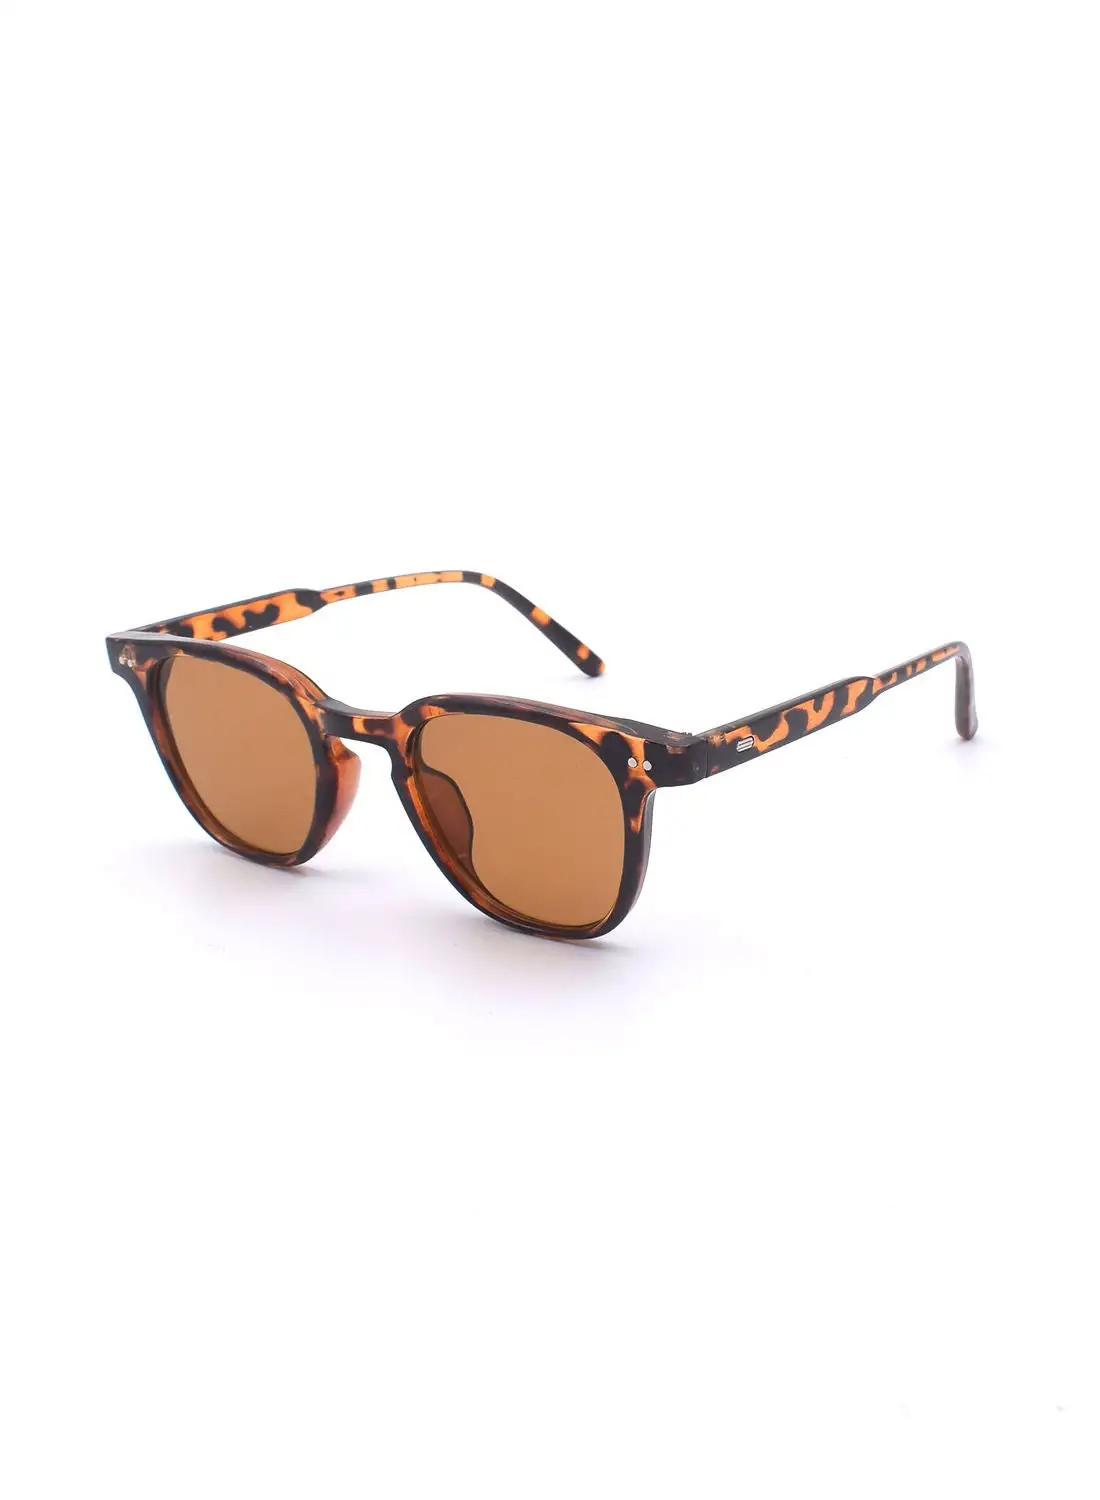 MADEYES Square Sunglasses EE20X062-4